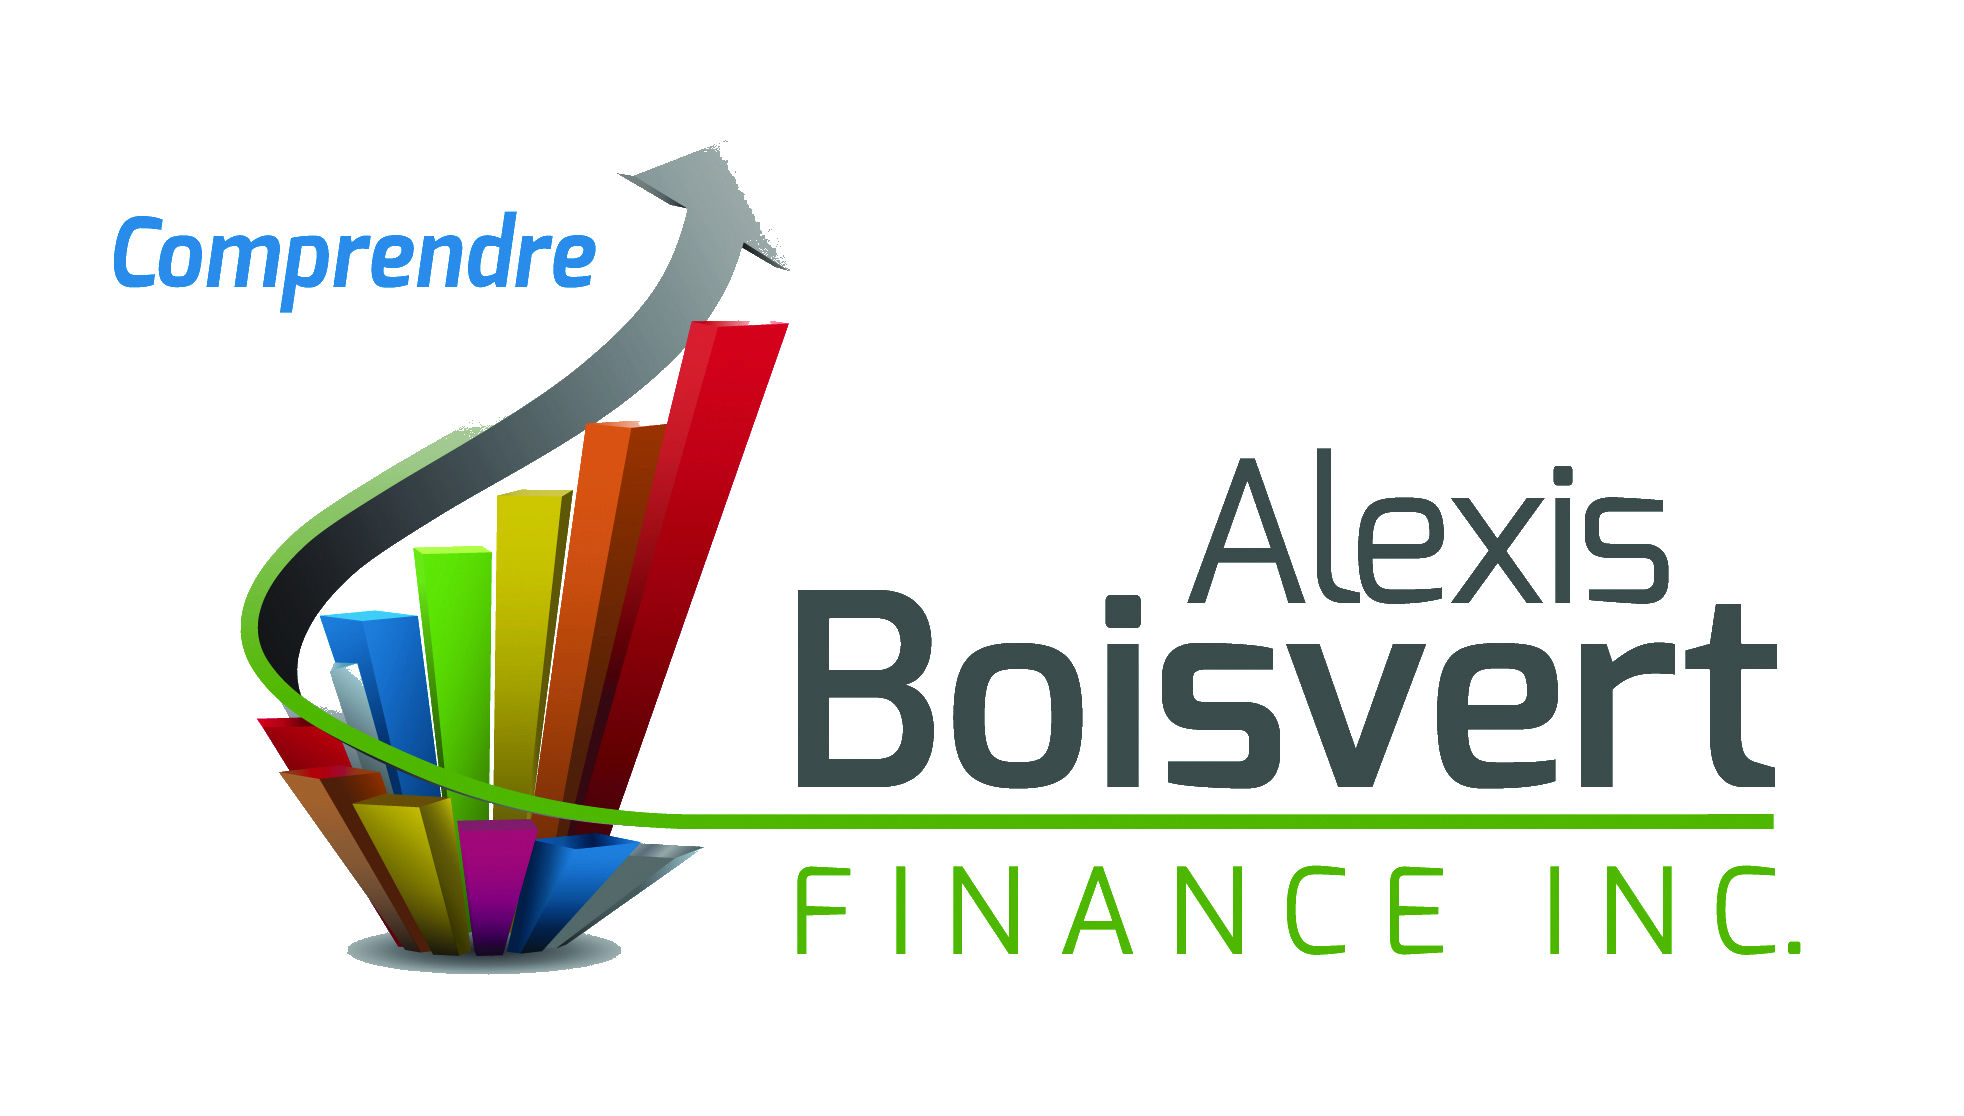 AB Finance Inc.